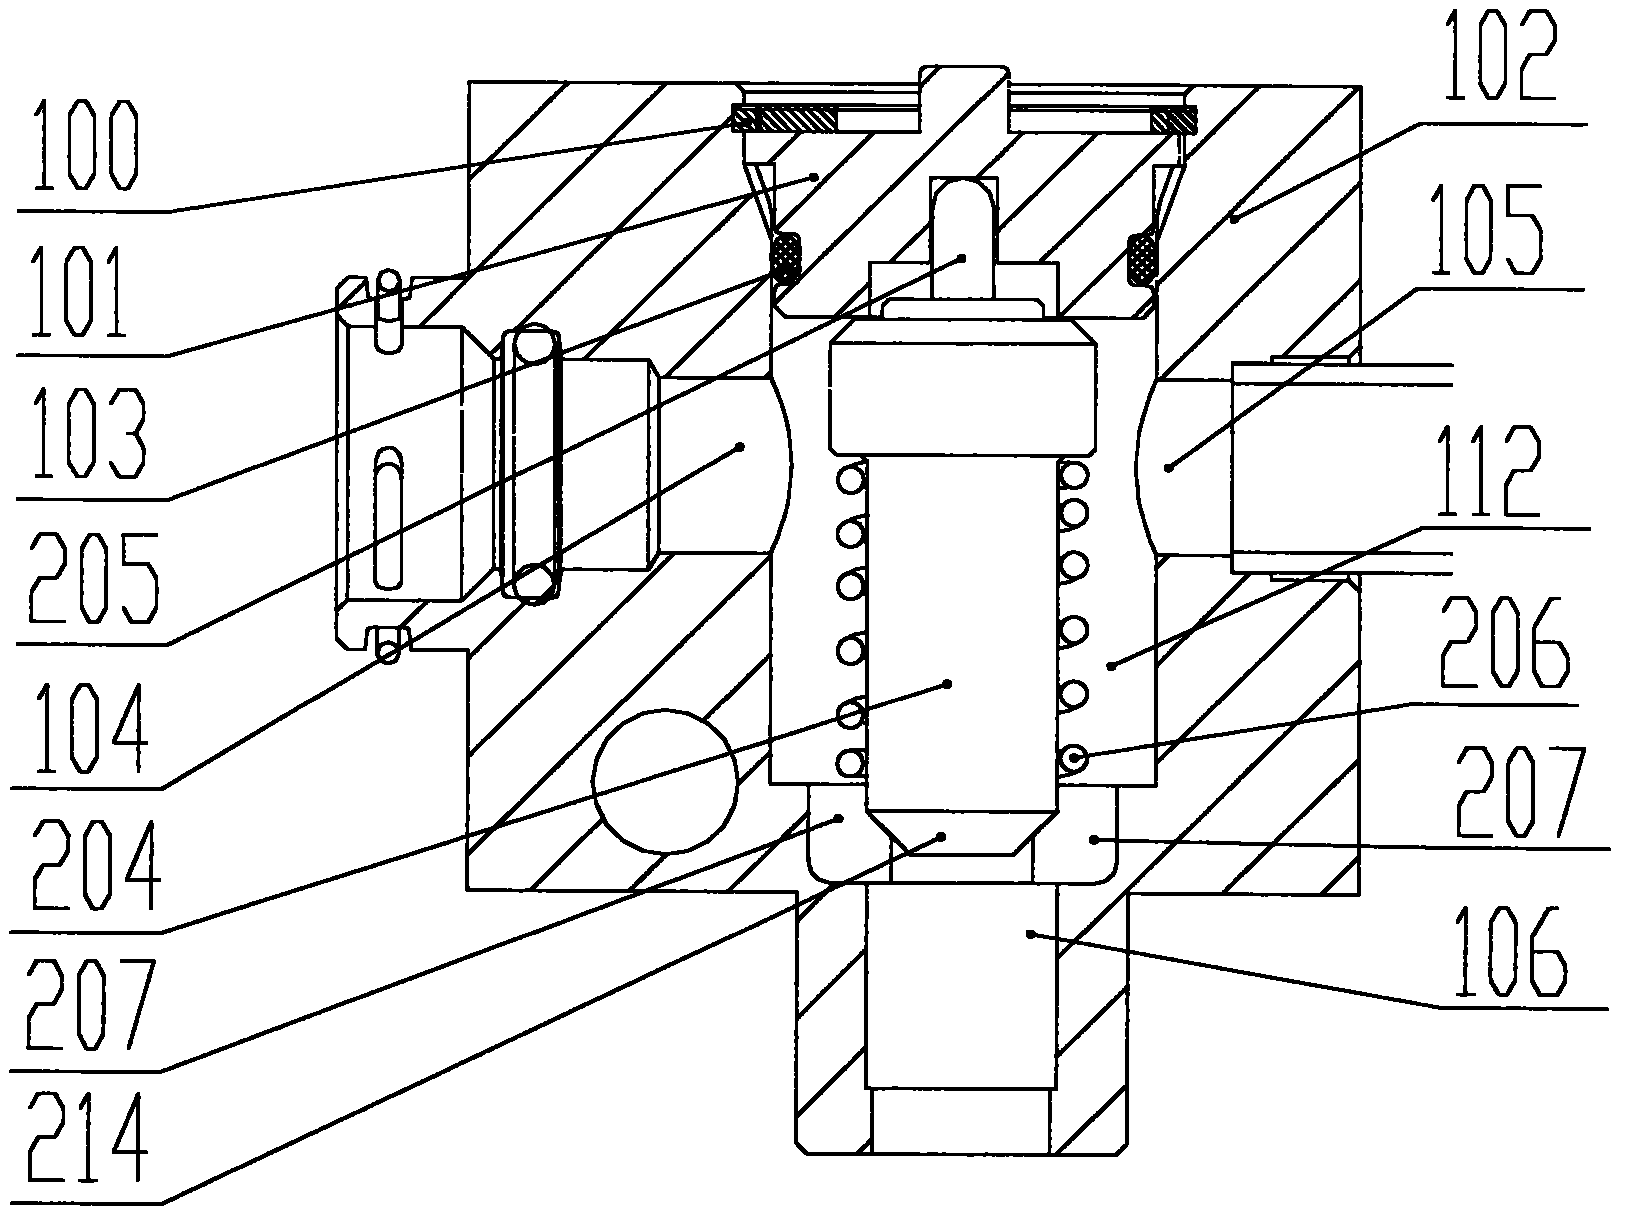 Thermostat for heat exchange loop